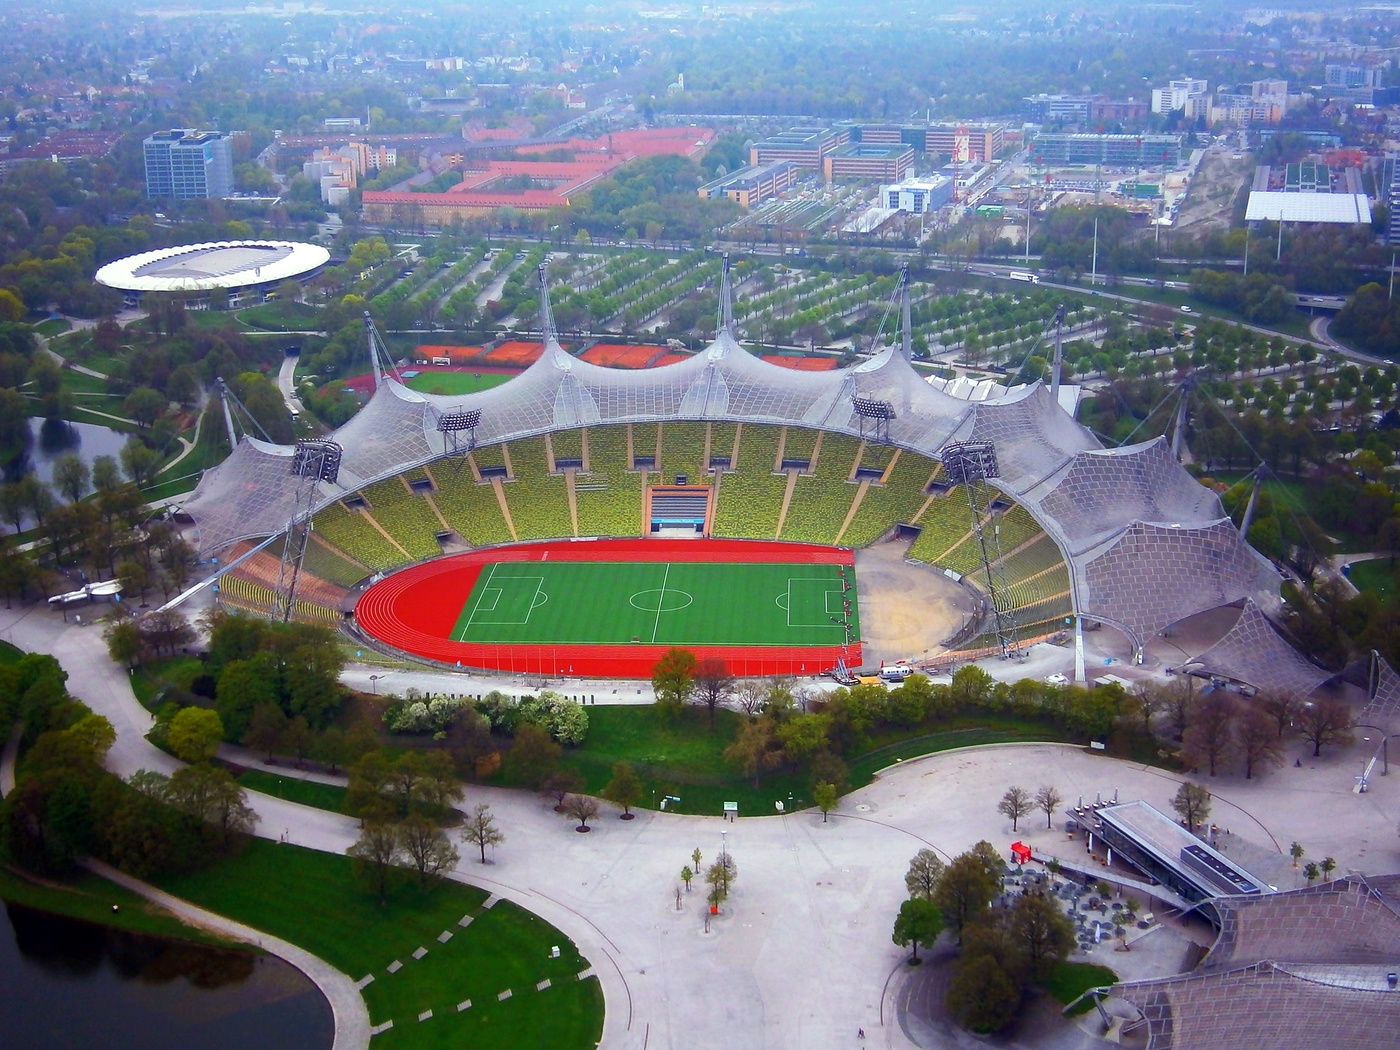 Olympic stadium. Стадион Олимпиаштадион Мюнхен. Олимпийский стадион Мюнхен 1972. Олимпия Штадиум Мюнхен. Олимпиаштадион - Мюнхен, Германия.